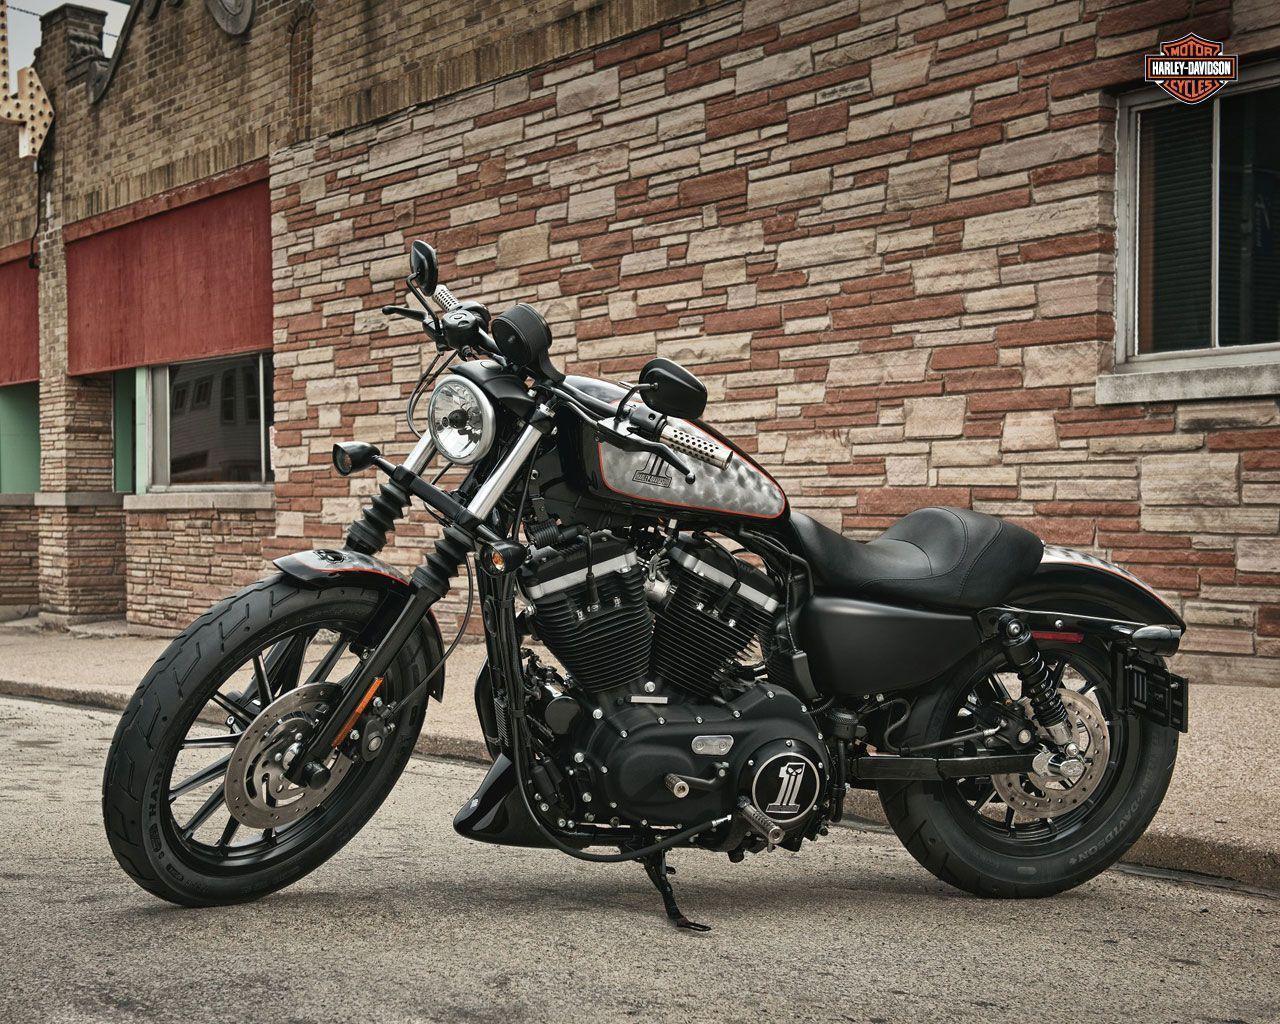 Harley Davidson XL883N Iron 883 Review